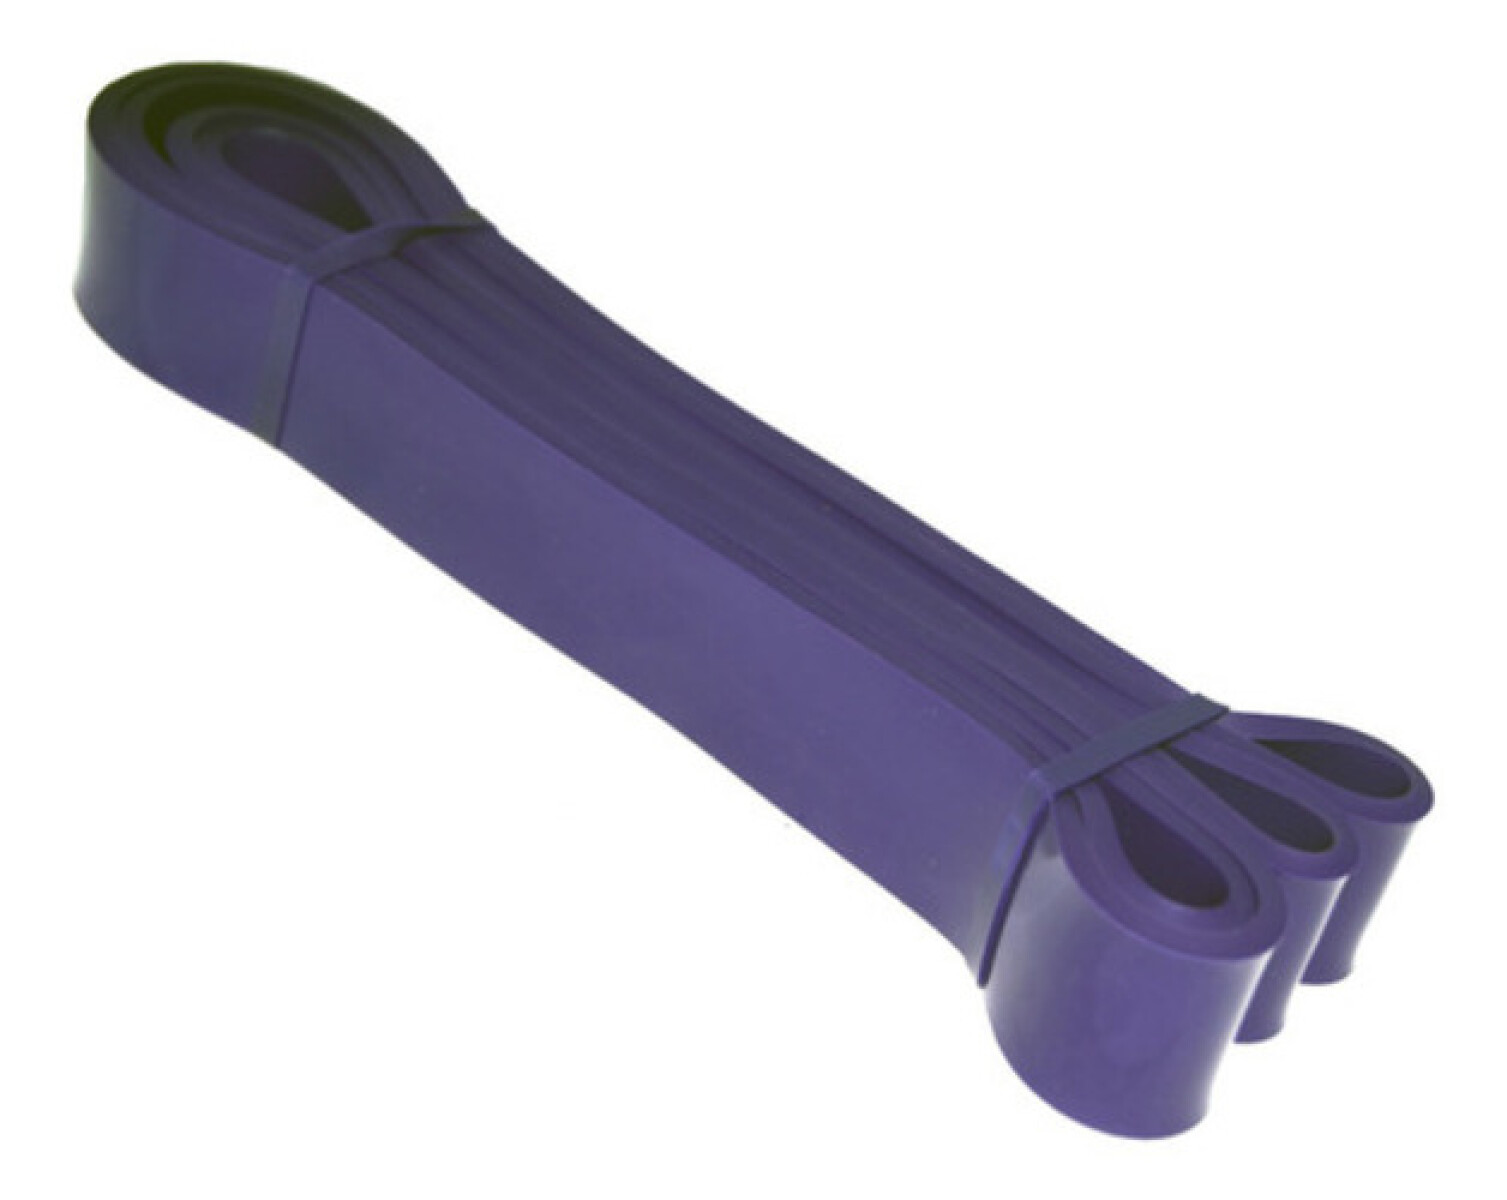 SUPERBANDA 32mm VIOLETA BANDA ELASTICA RESISTENTE GYM - Superbanda 32mm Violeta Banda Elastica Resistente Gym 